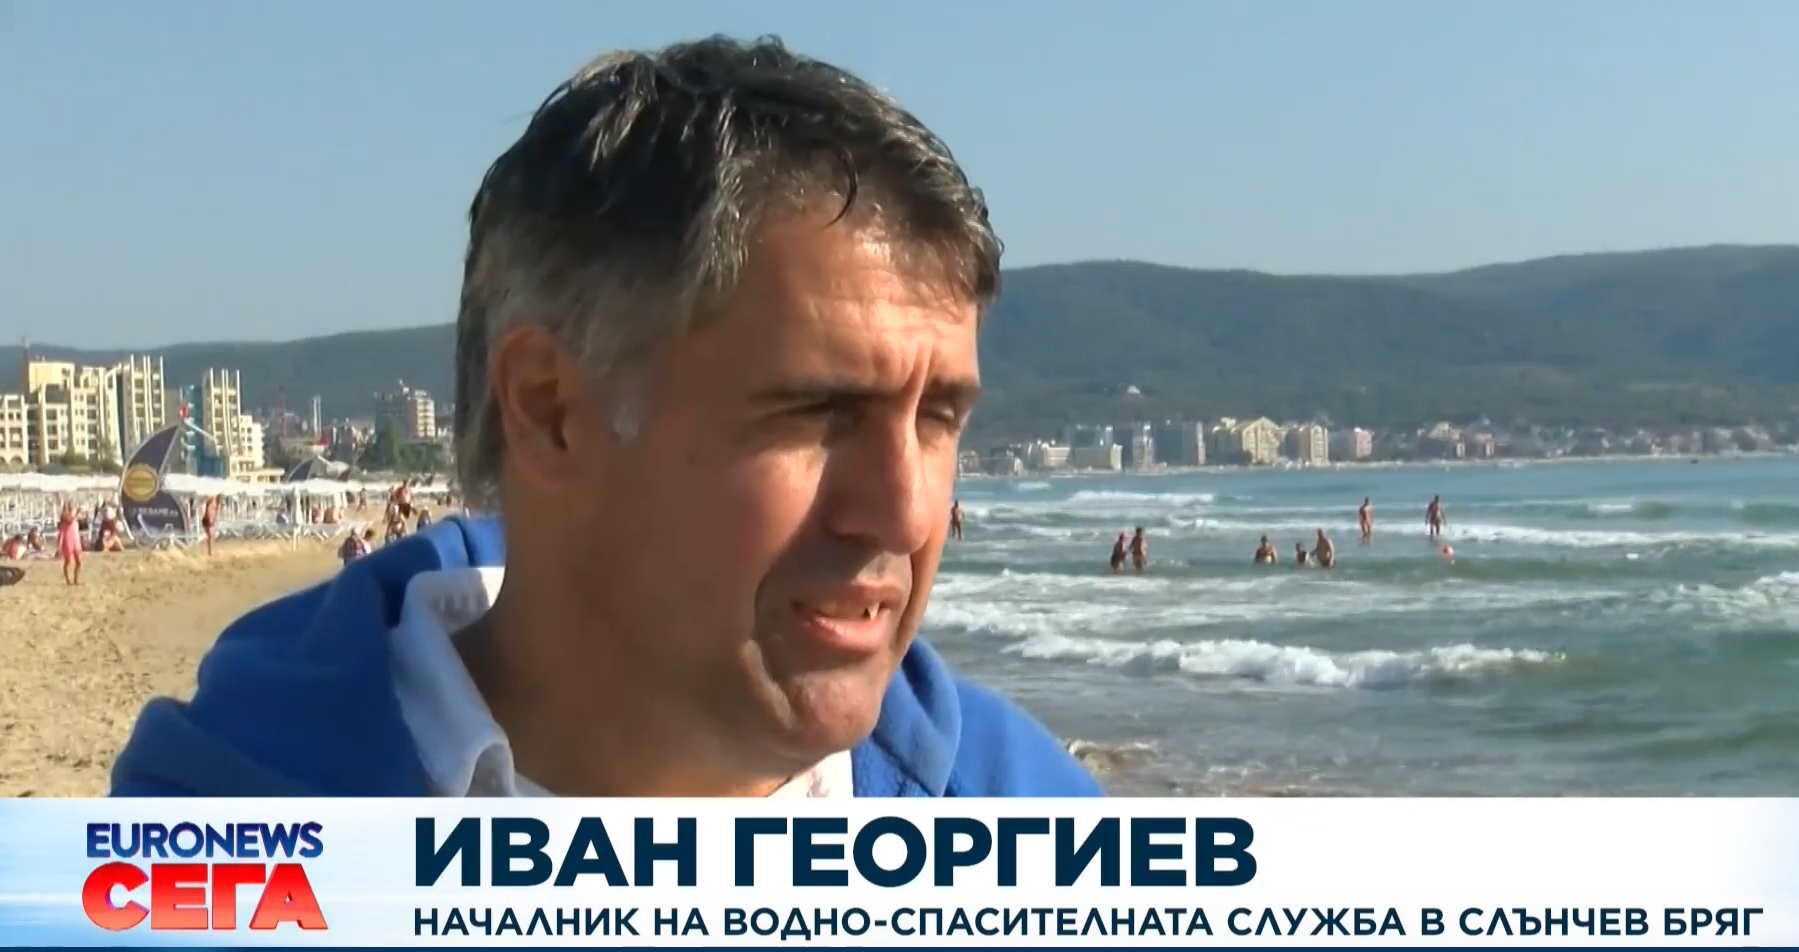 Спасителят, който почина вчера в Слънчев бряг, спасявайки две украинки,